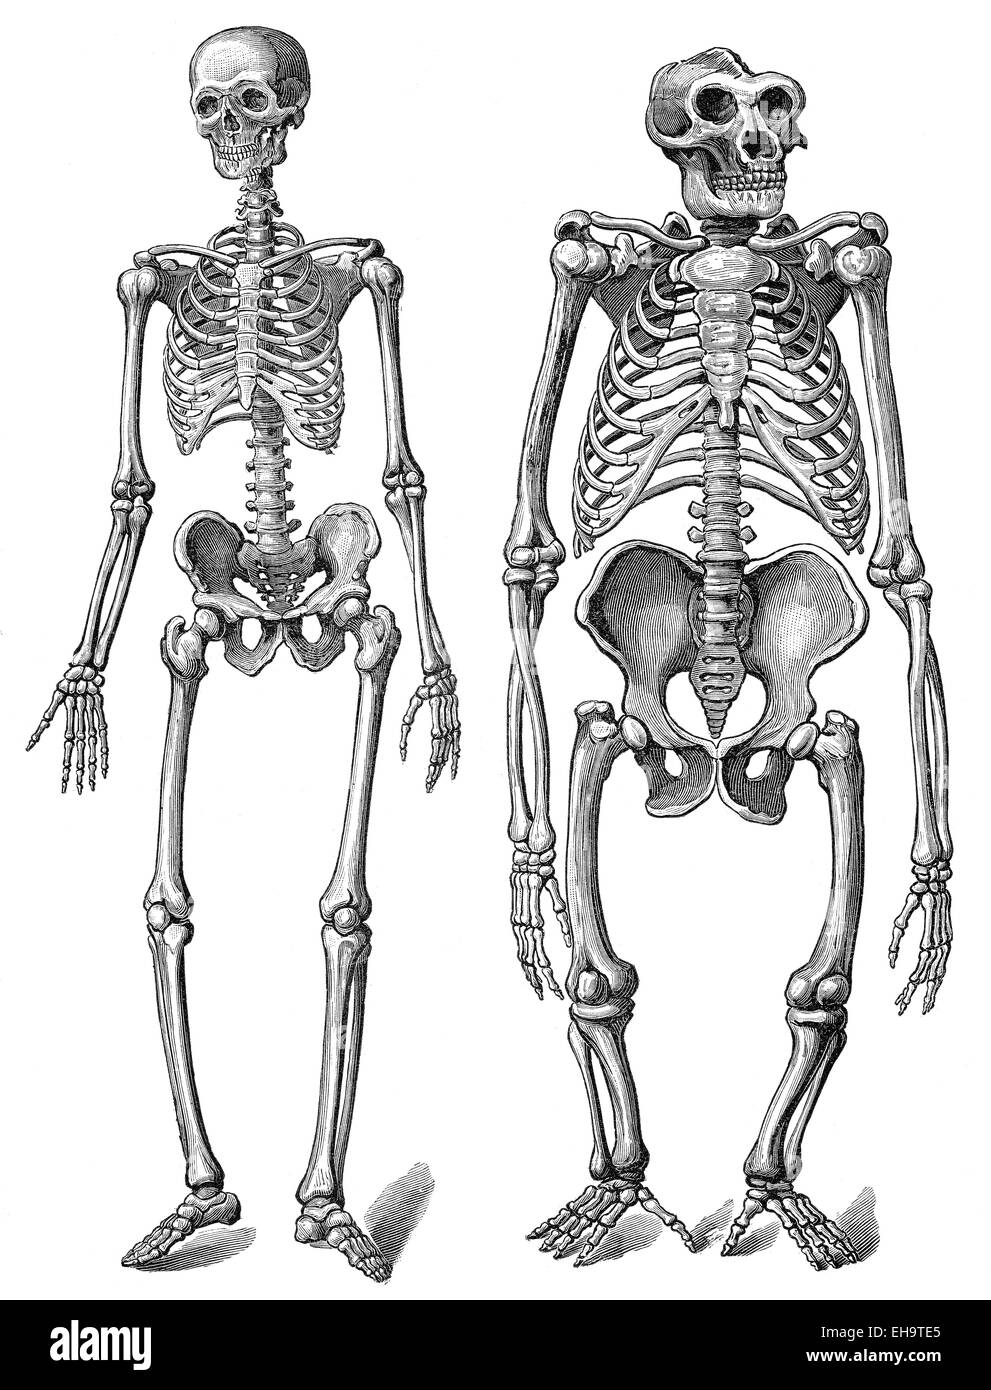 http://c8.alamy.com/comp/EH9TE5/the-human-skeleton-as-compared-to-a-gorilla-skeleton-anatomy-evolution-EH9TE5.jpg